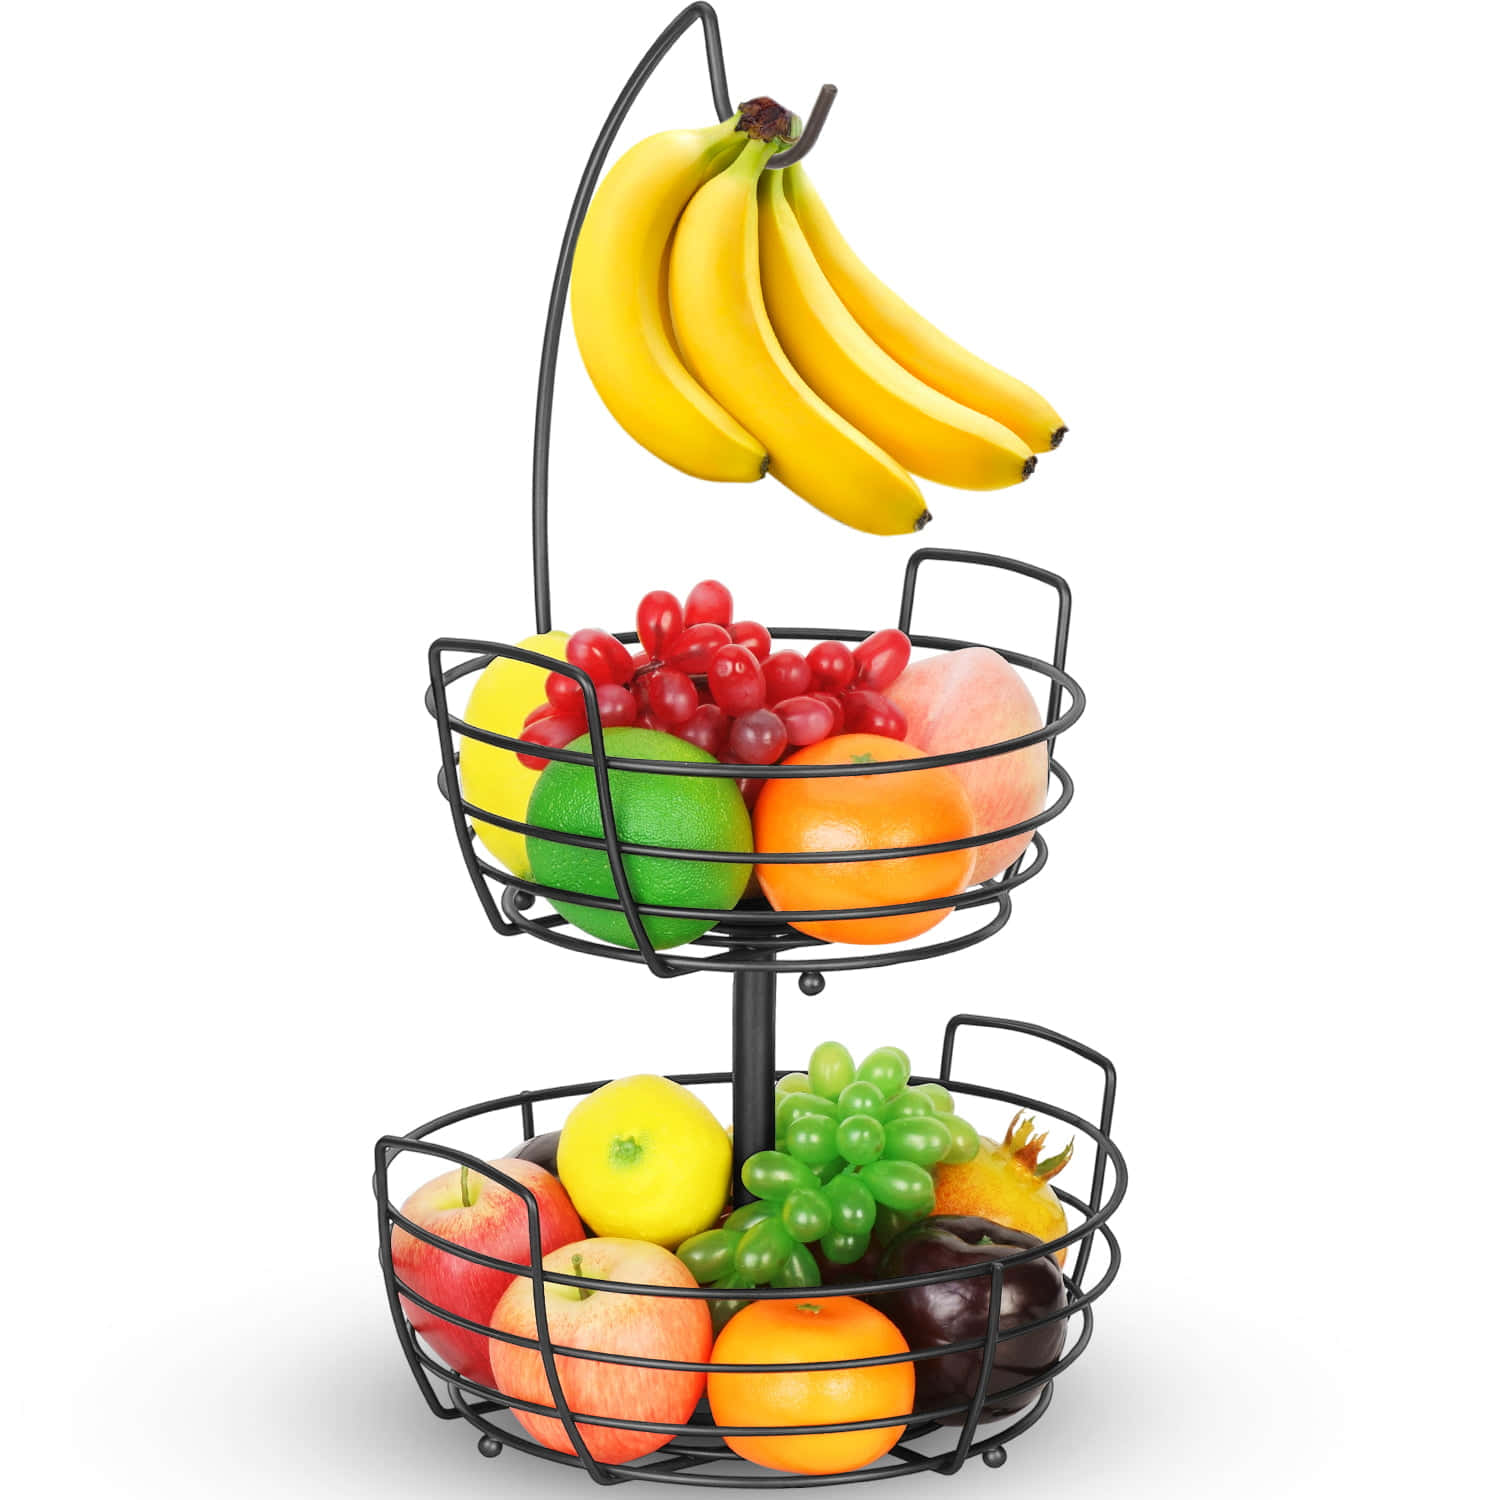 Tohru Honda  Fruits Basket Wiki  Fandom